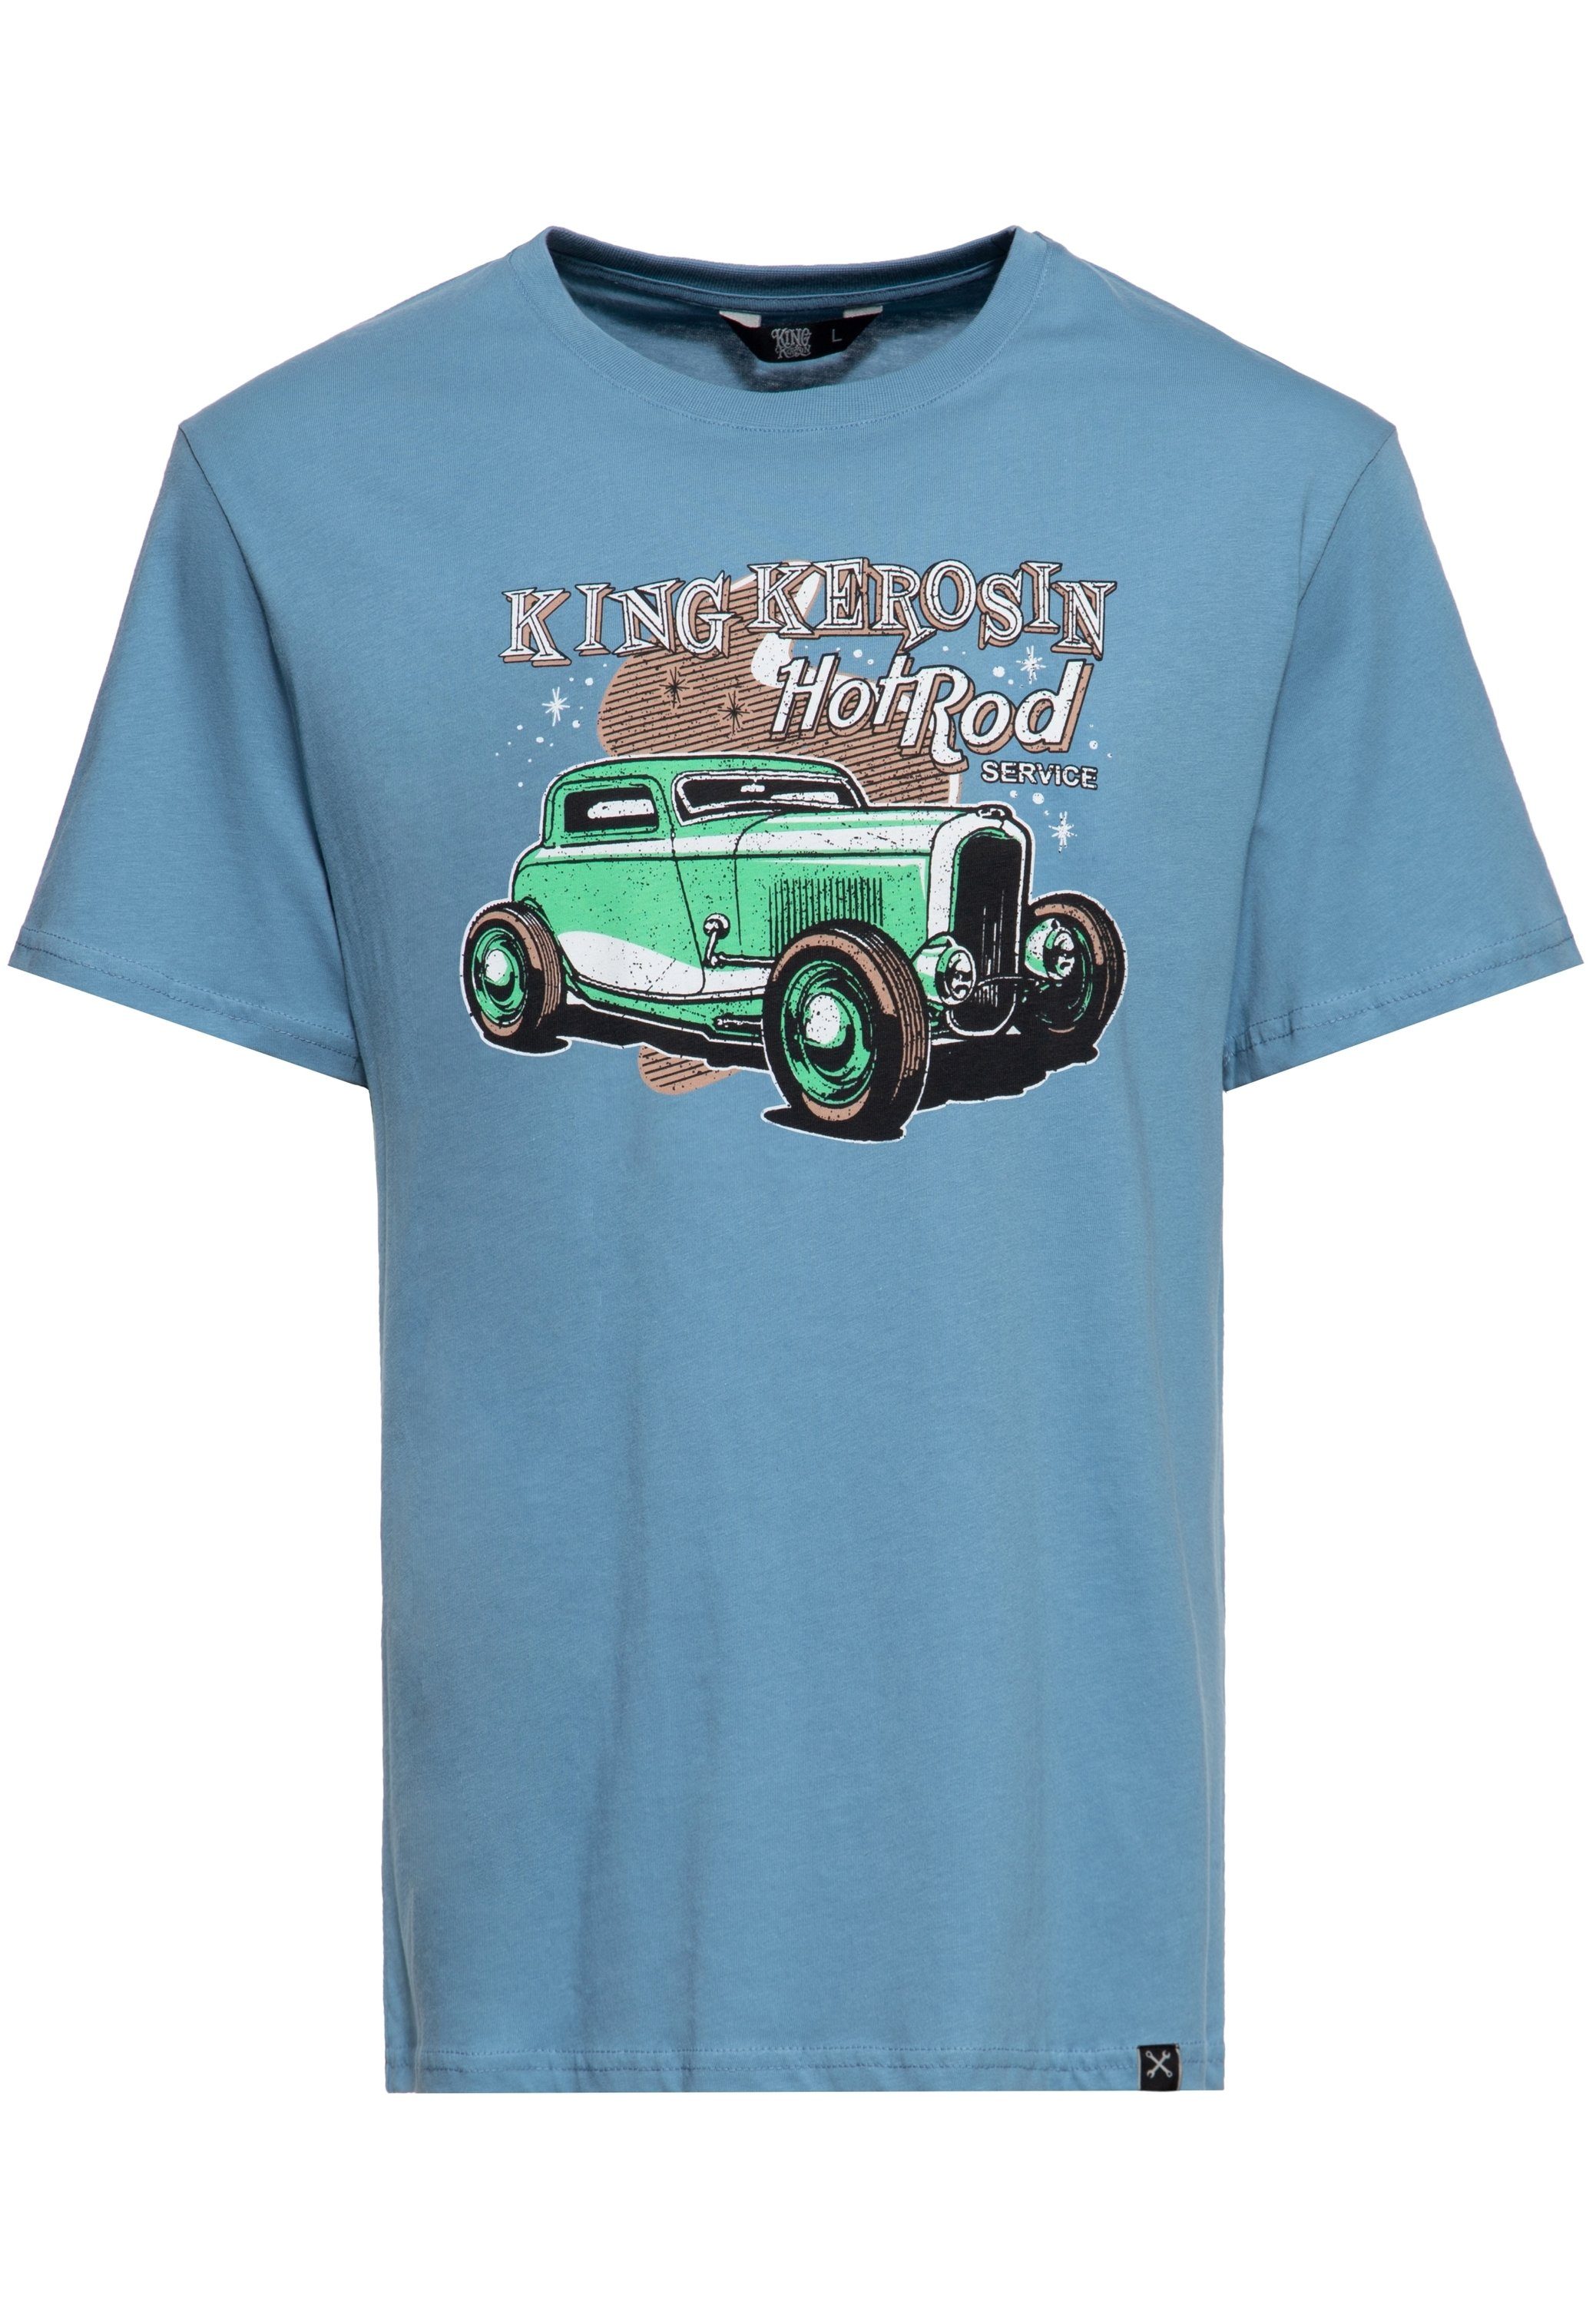 KingKerosin Print-Shirt Hotrod Service mit Retro-Artwork Print blau